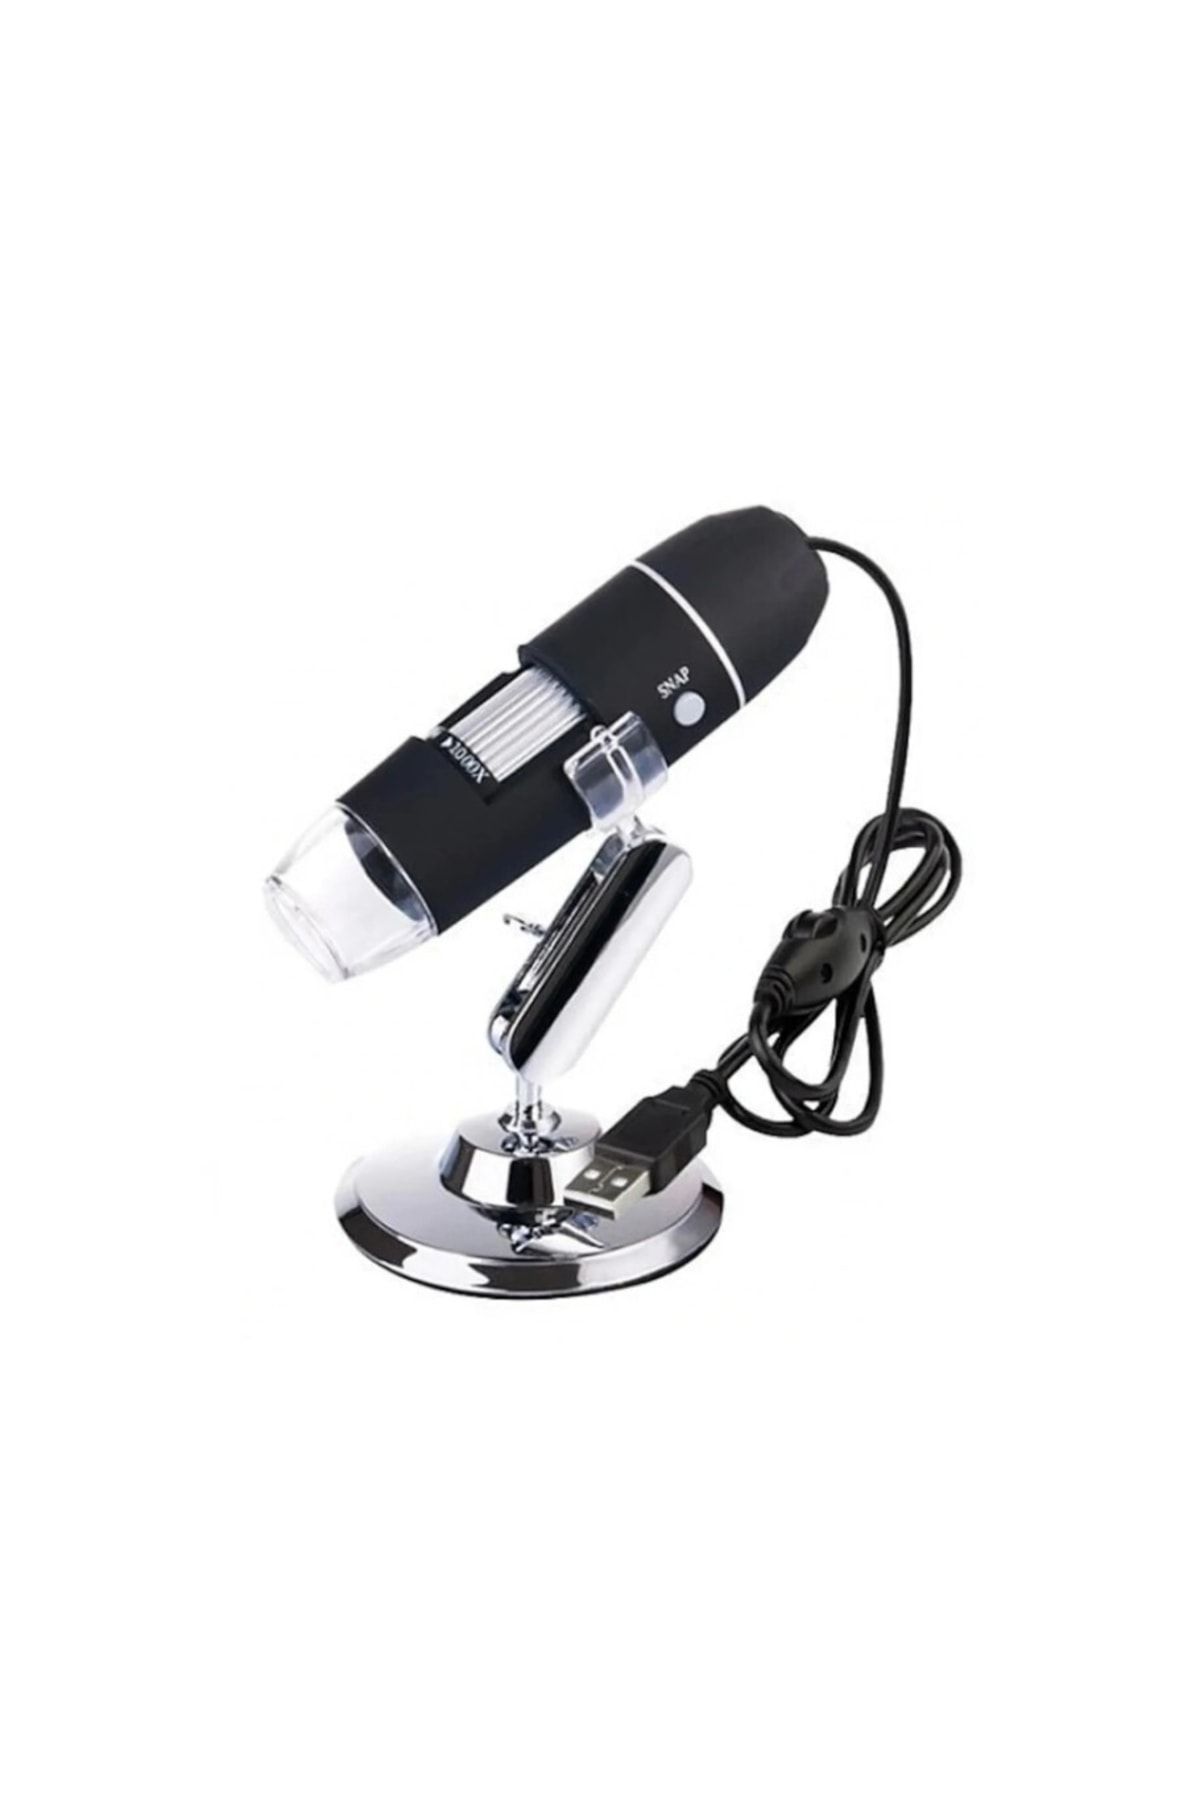 LEIDORY 1600x Zoom 2mp Usb Dijital Mikroskop 8 Ledli Kamera